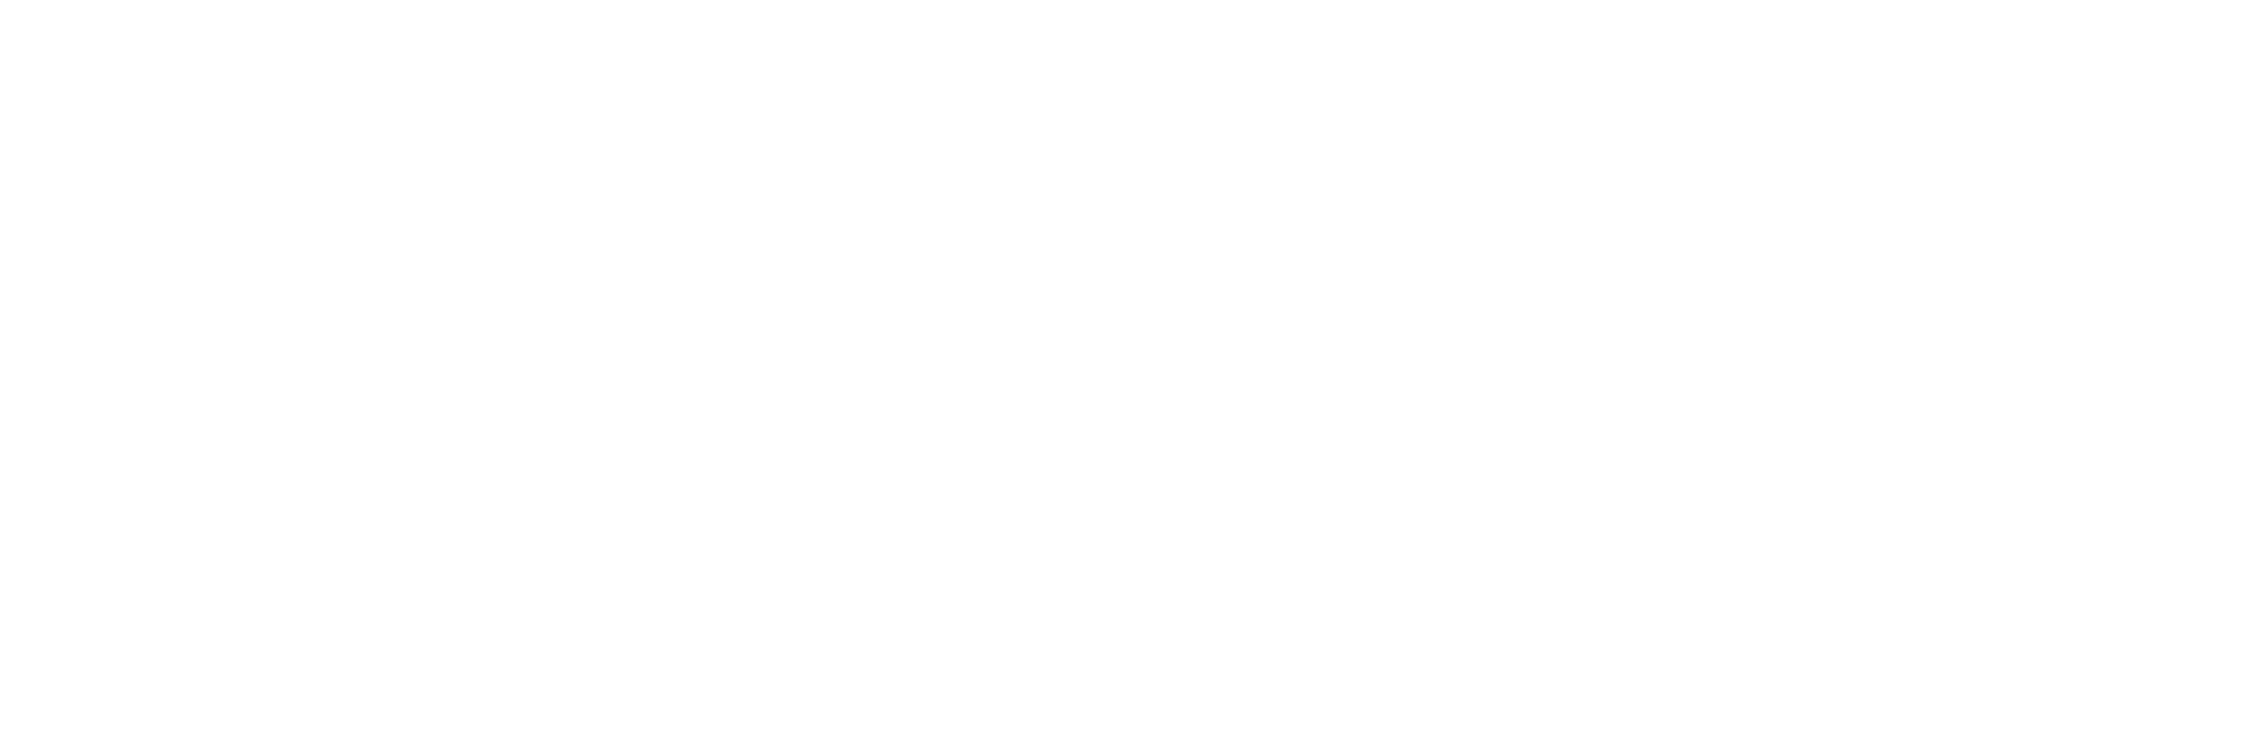 Engaged Team Health Quiz